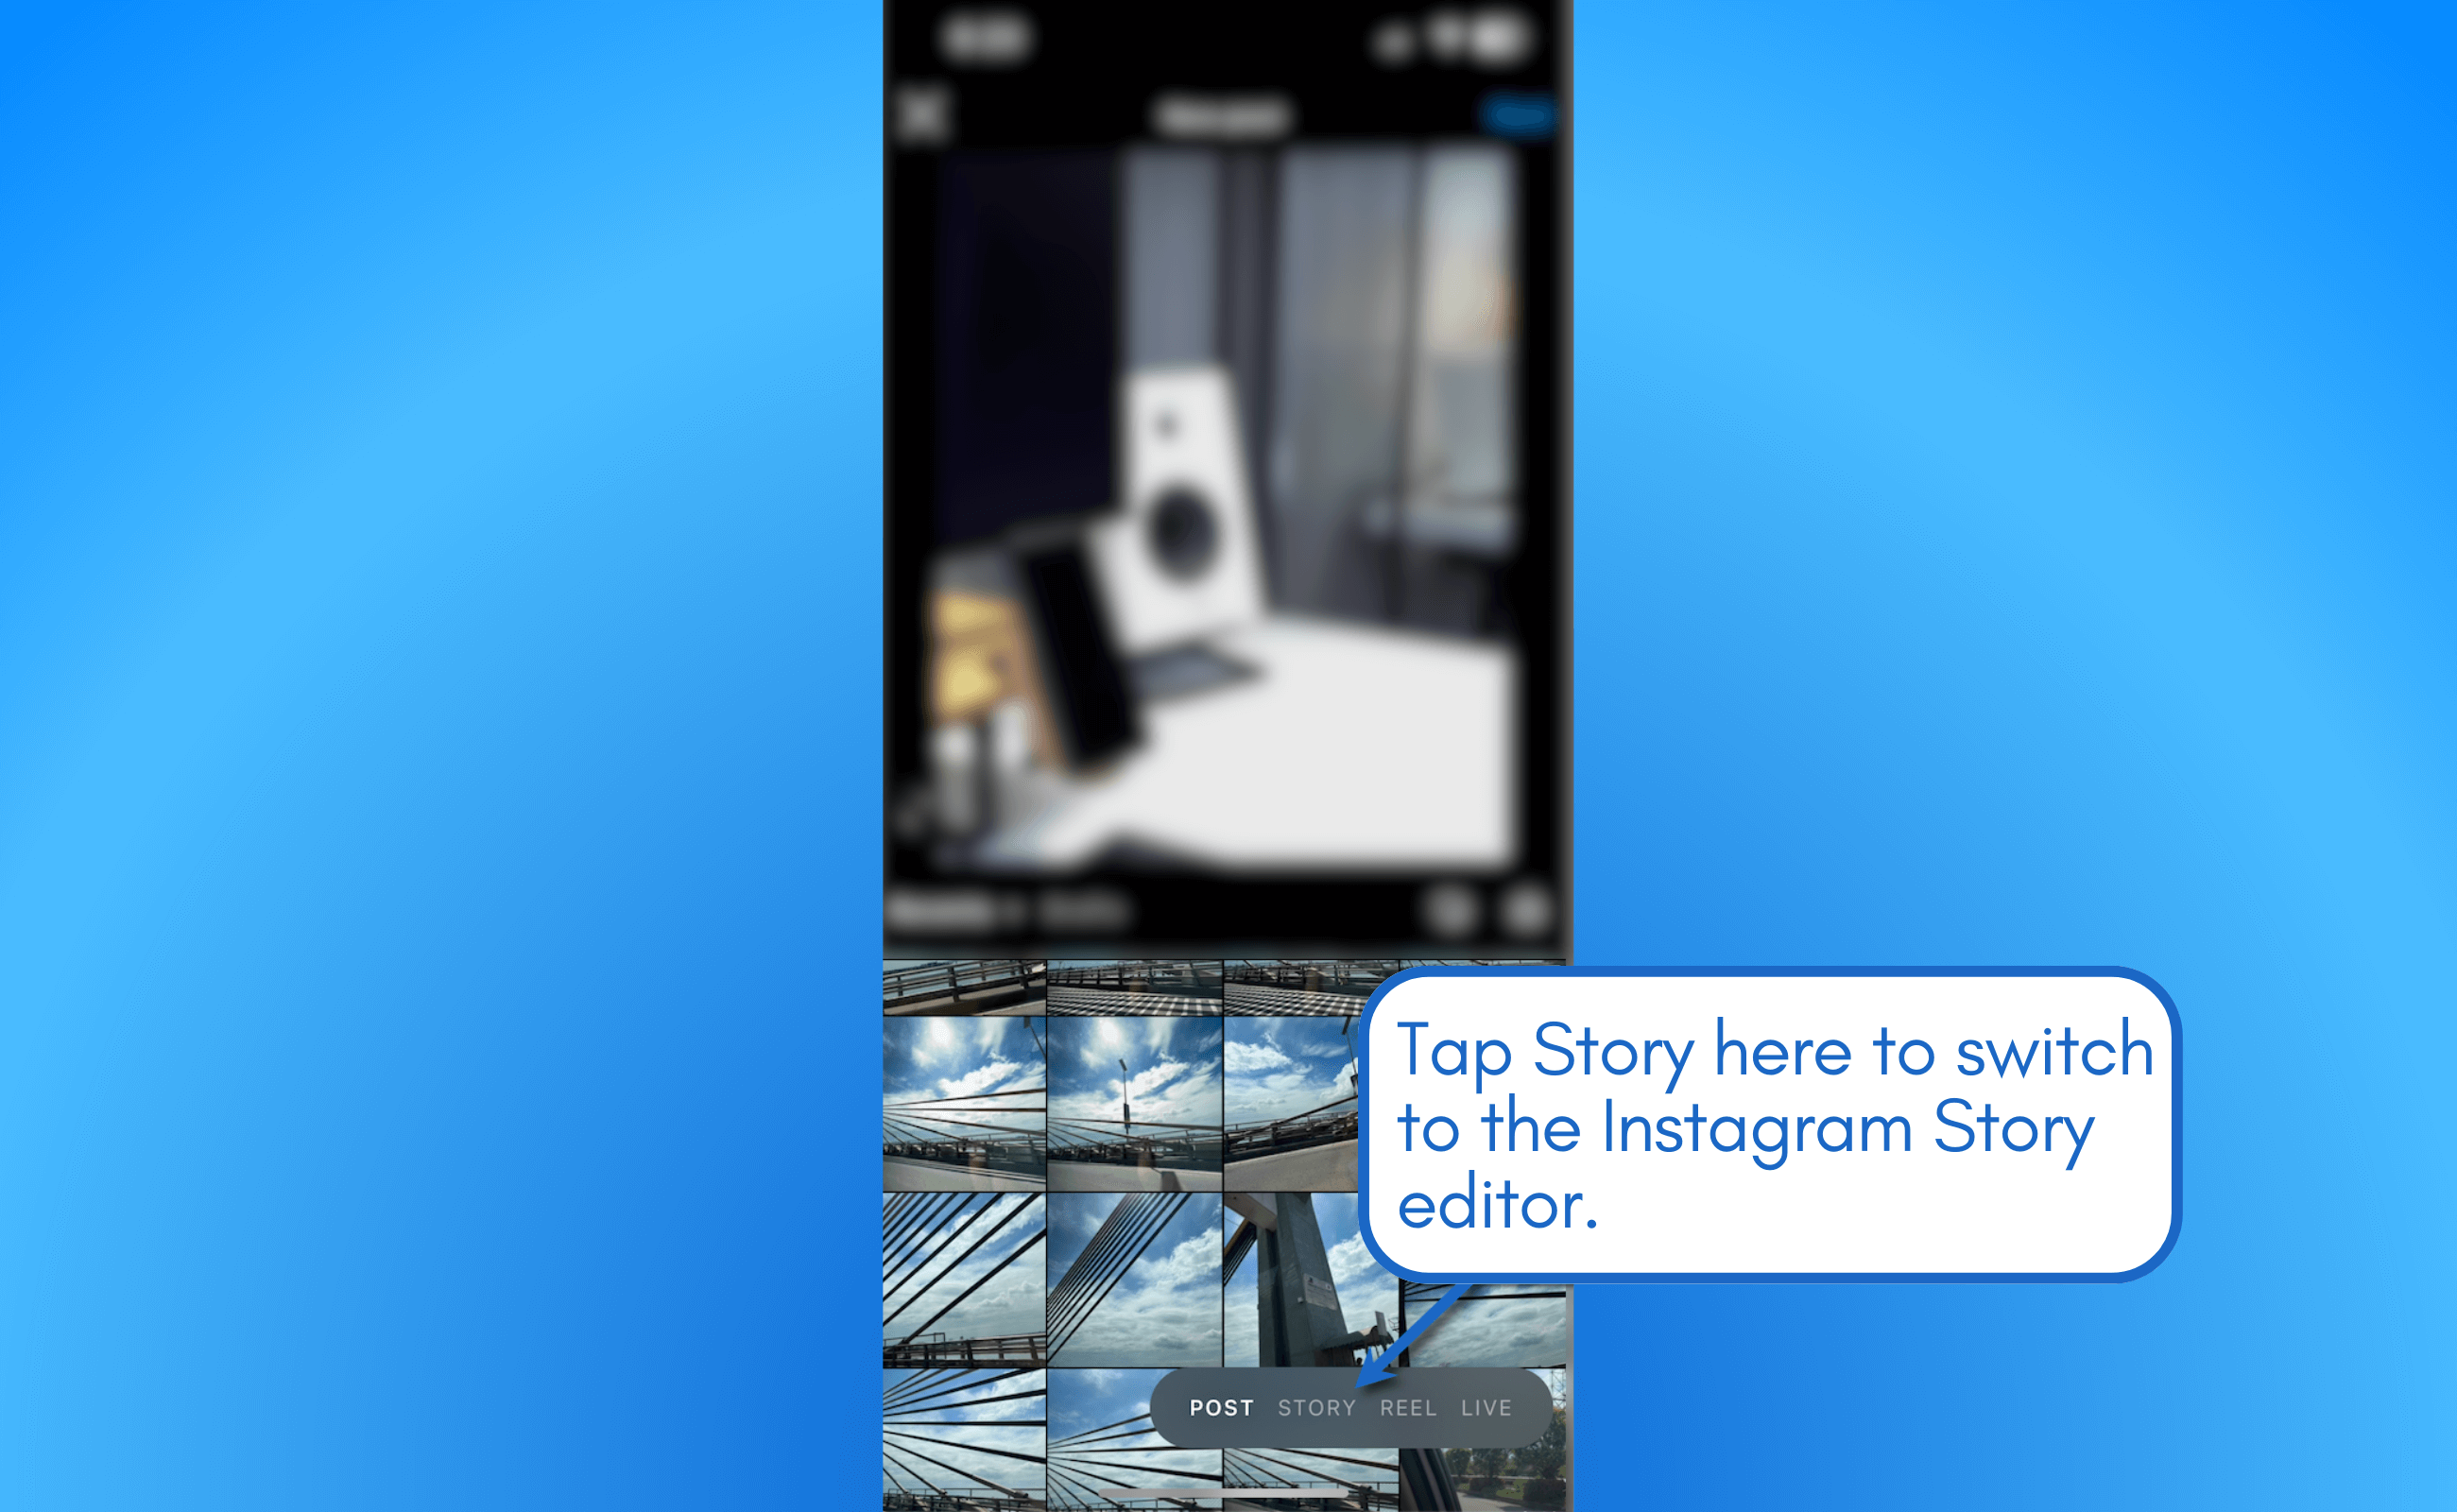 Go to Instagram Story editor.